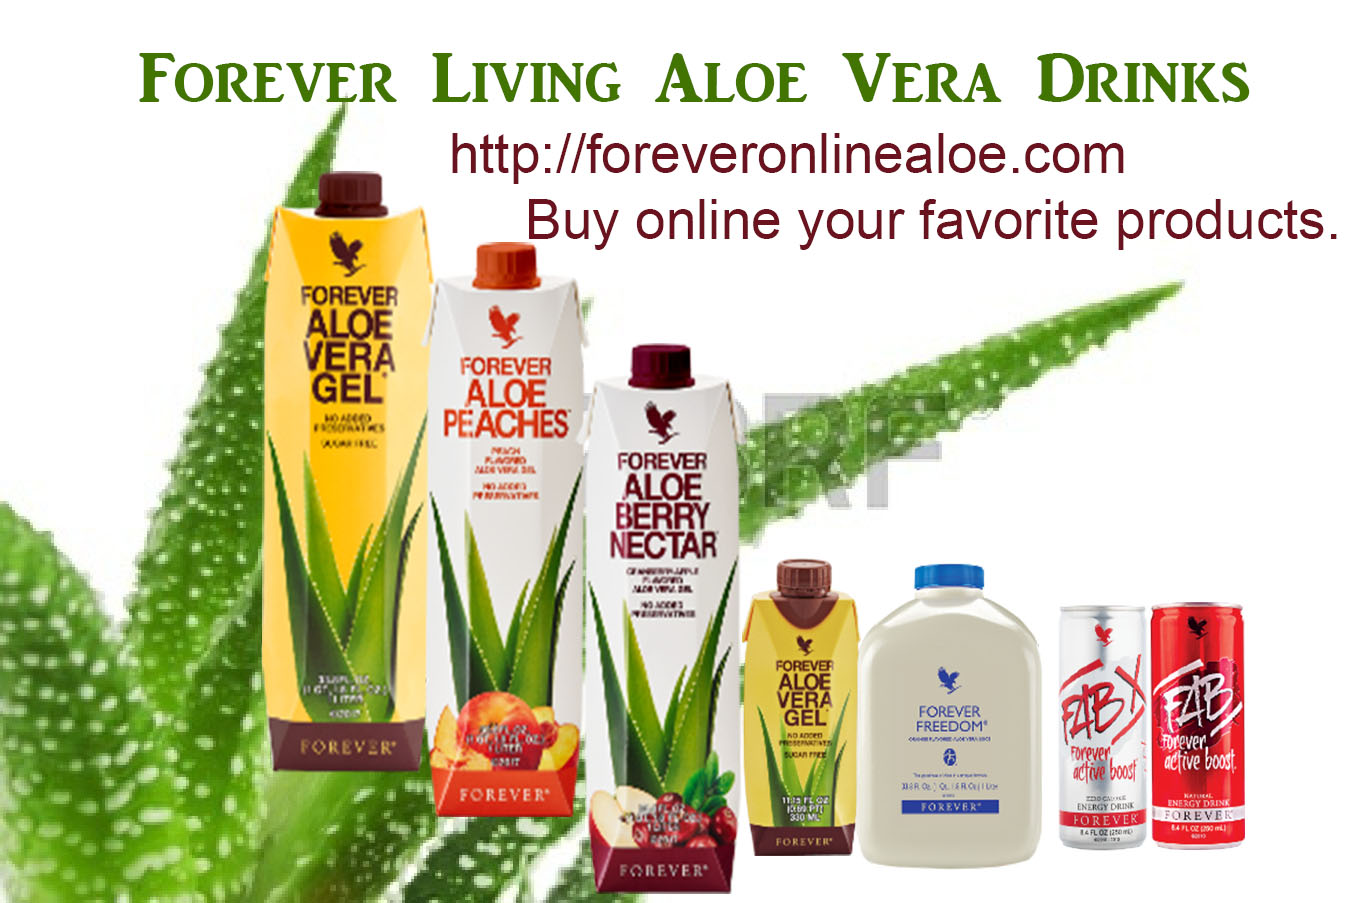 Aloe Vera: 10 Amazing Benefits That Will Boost Your Health